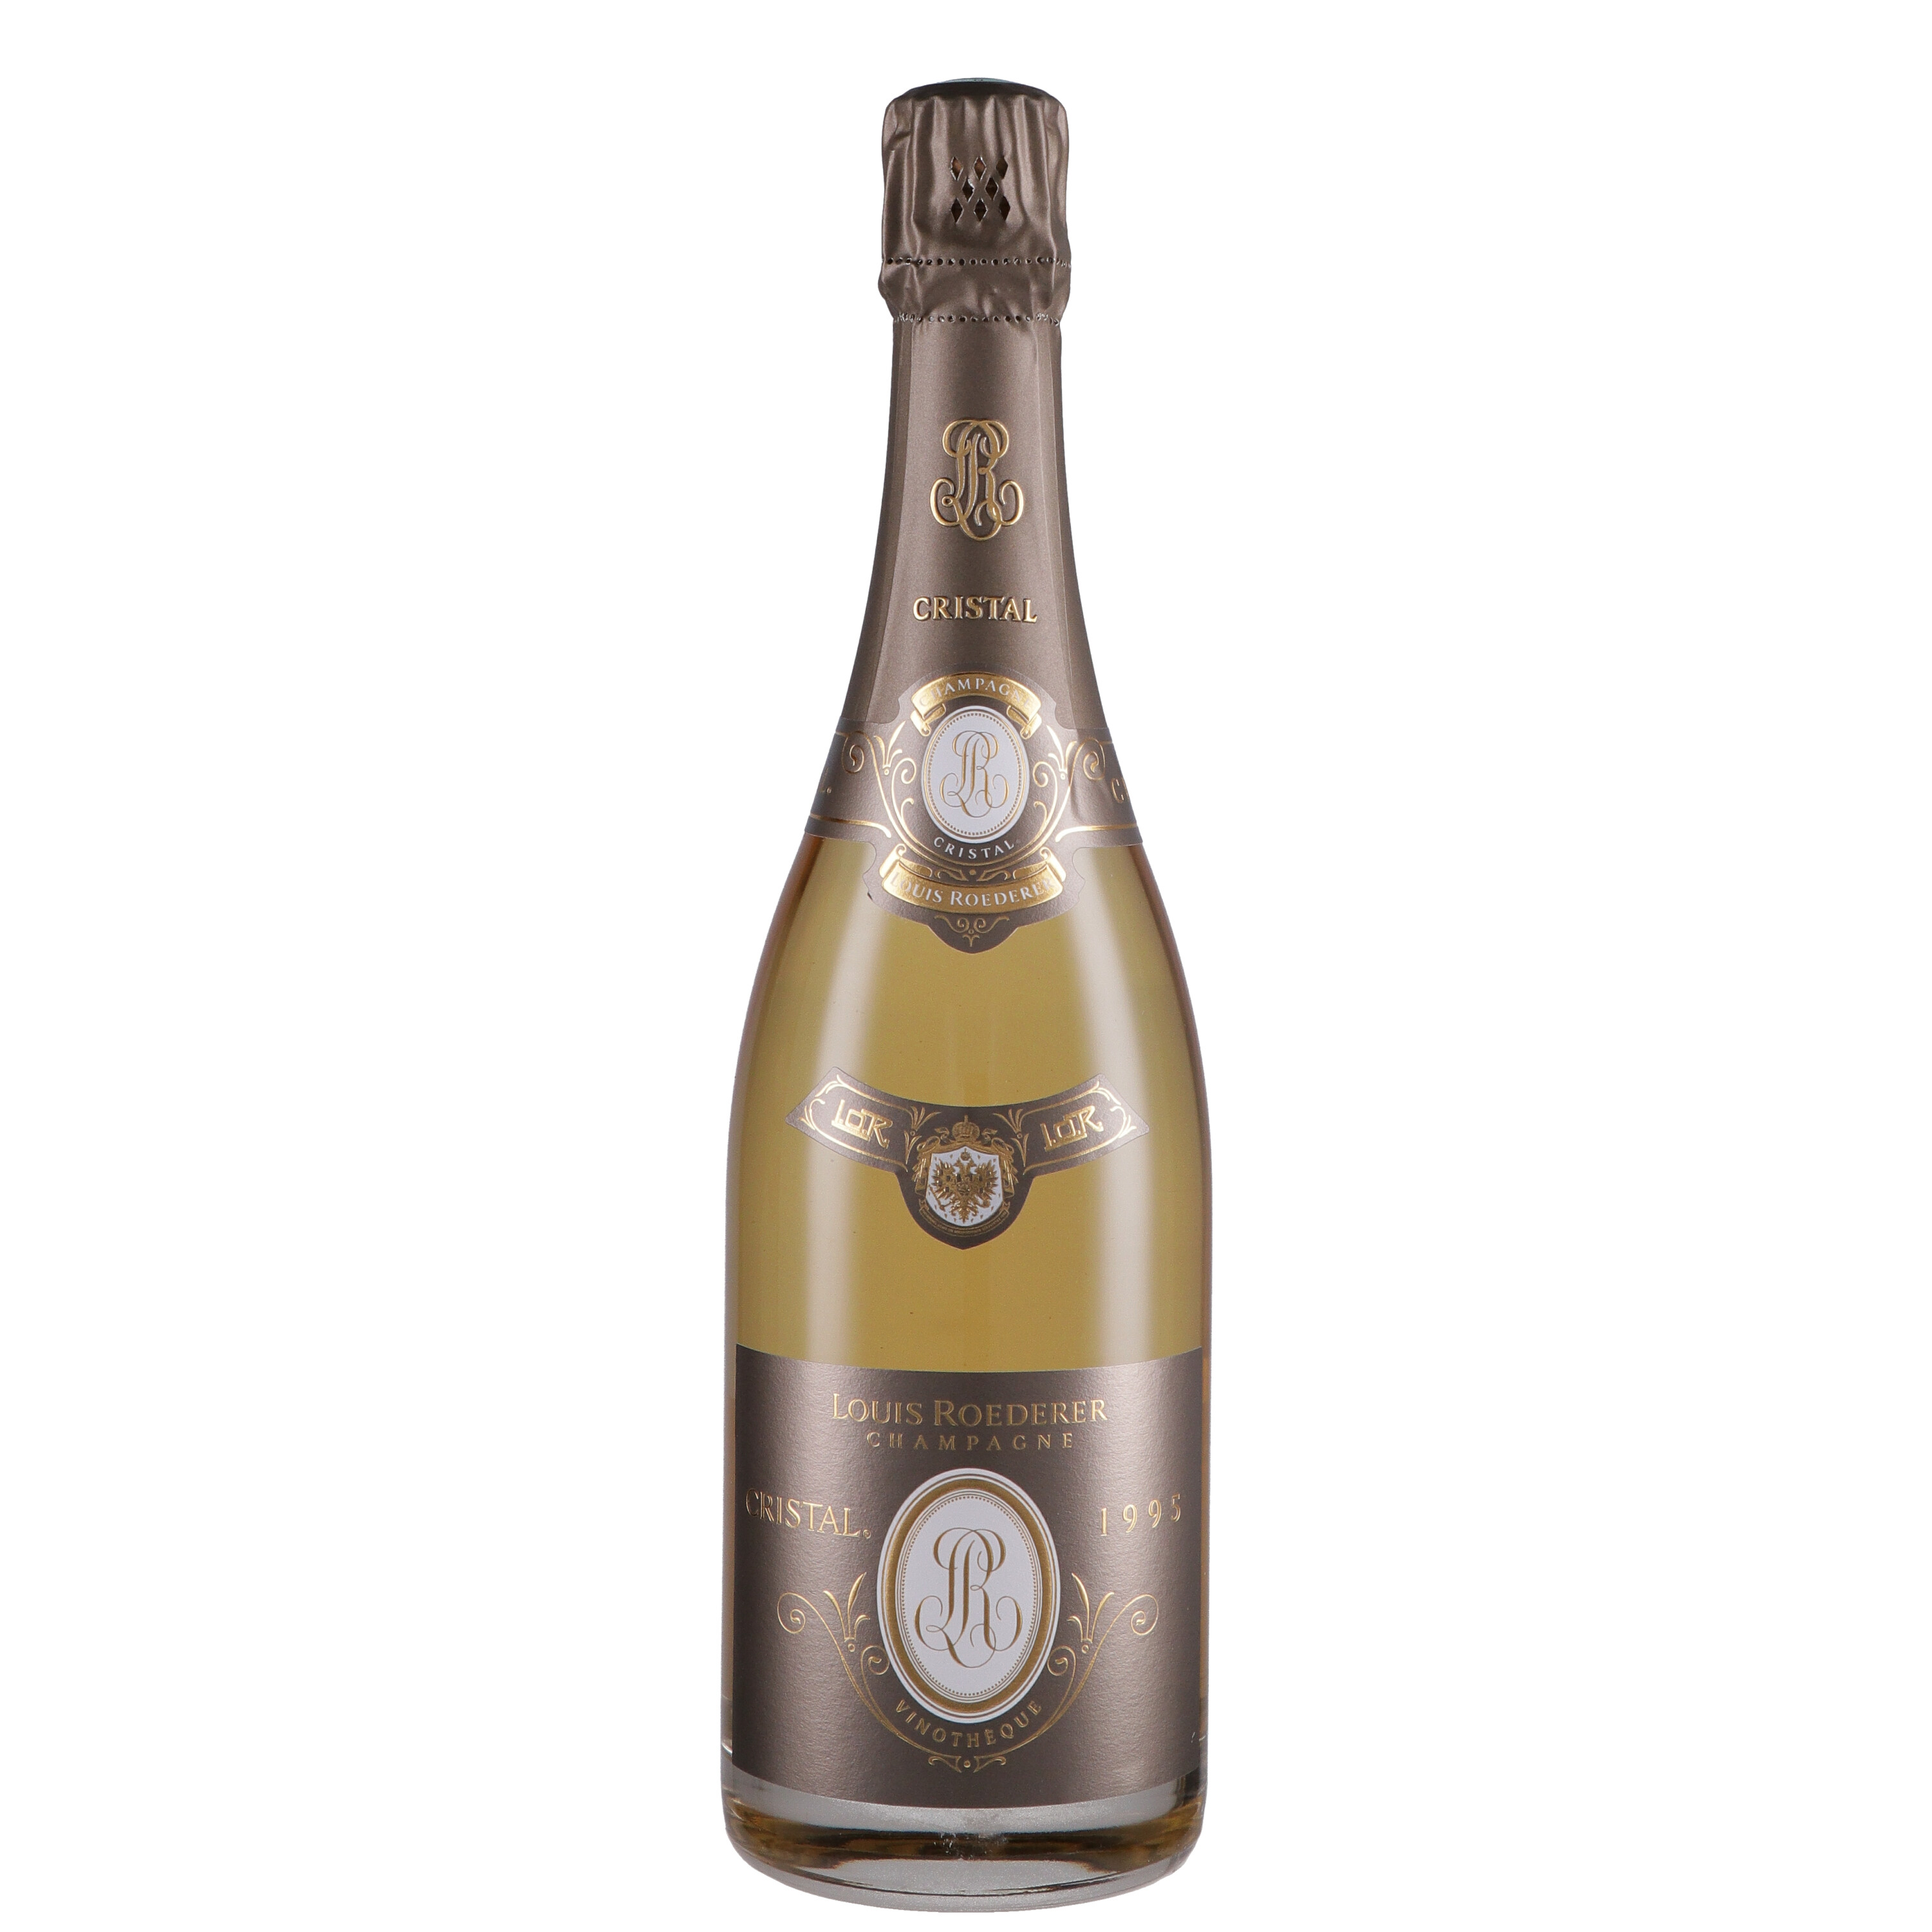 Champagne Brut Cristal   Vinotheque 1995